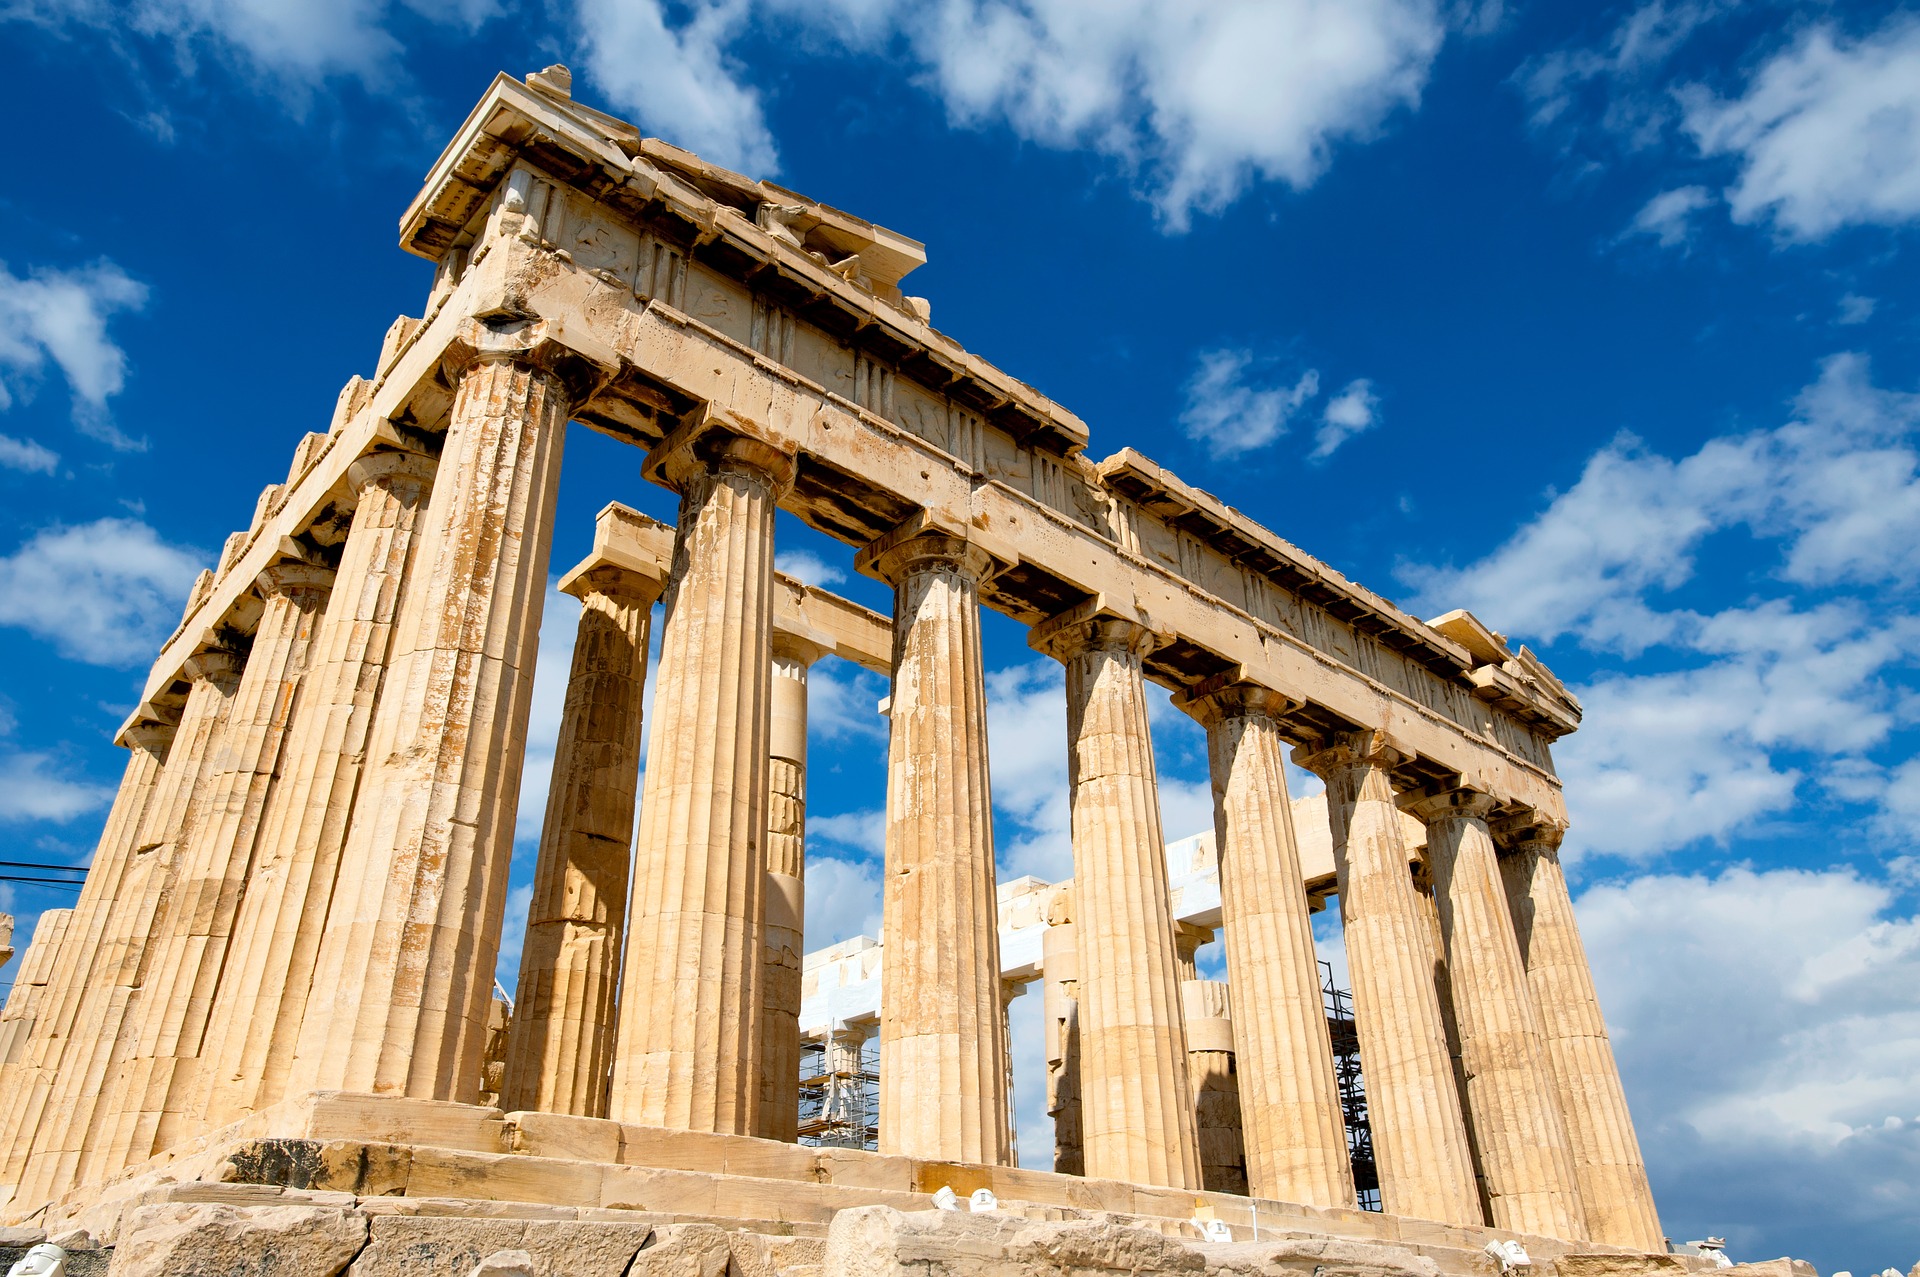 The Parthenon in Greece